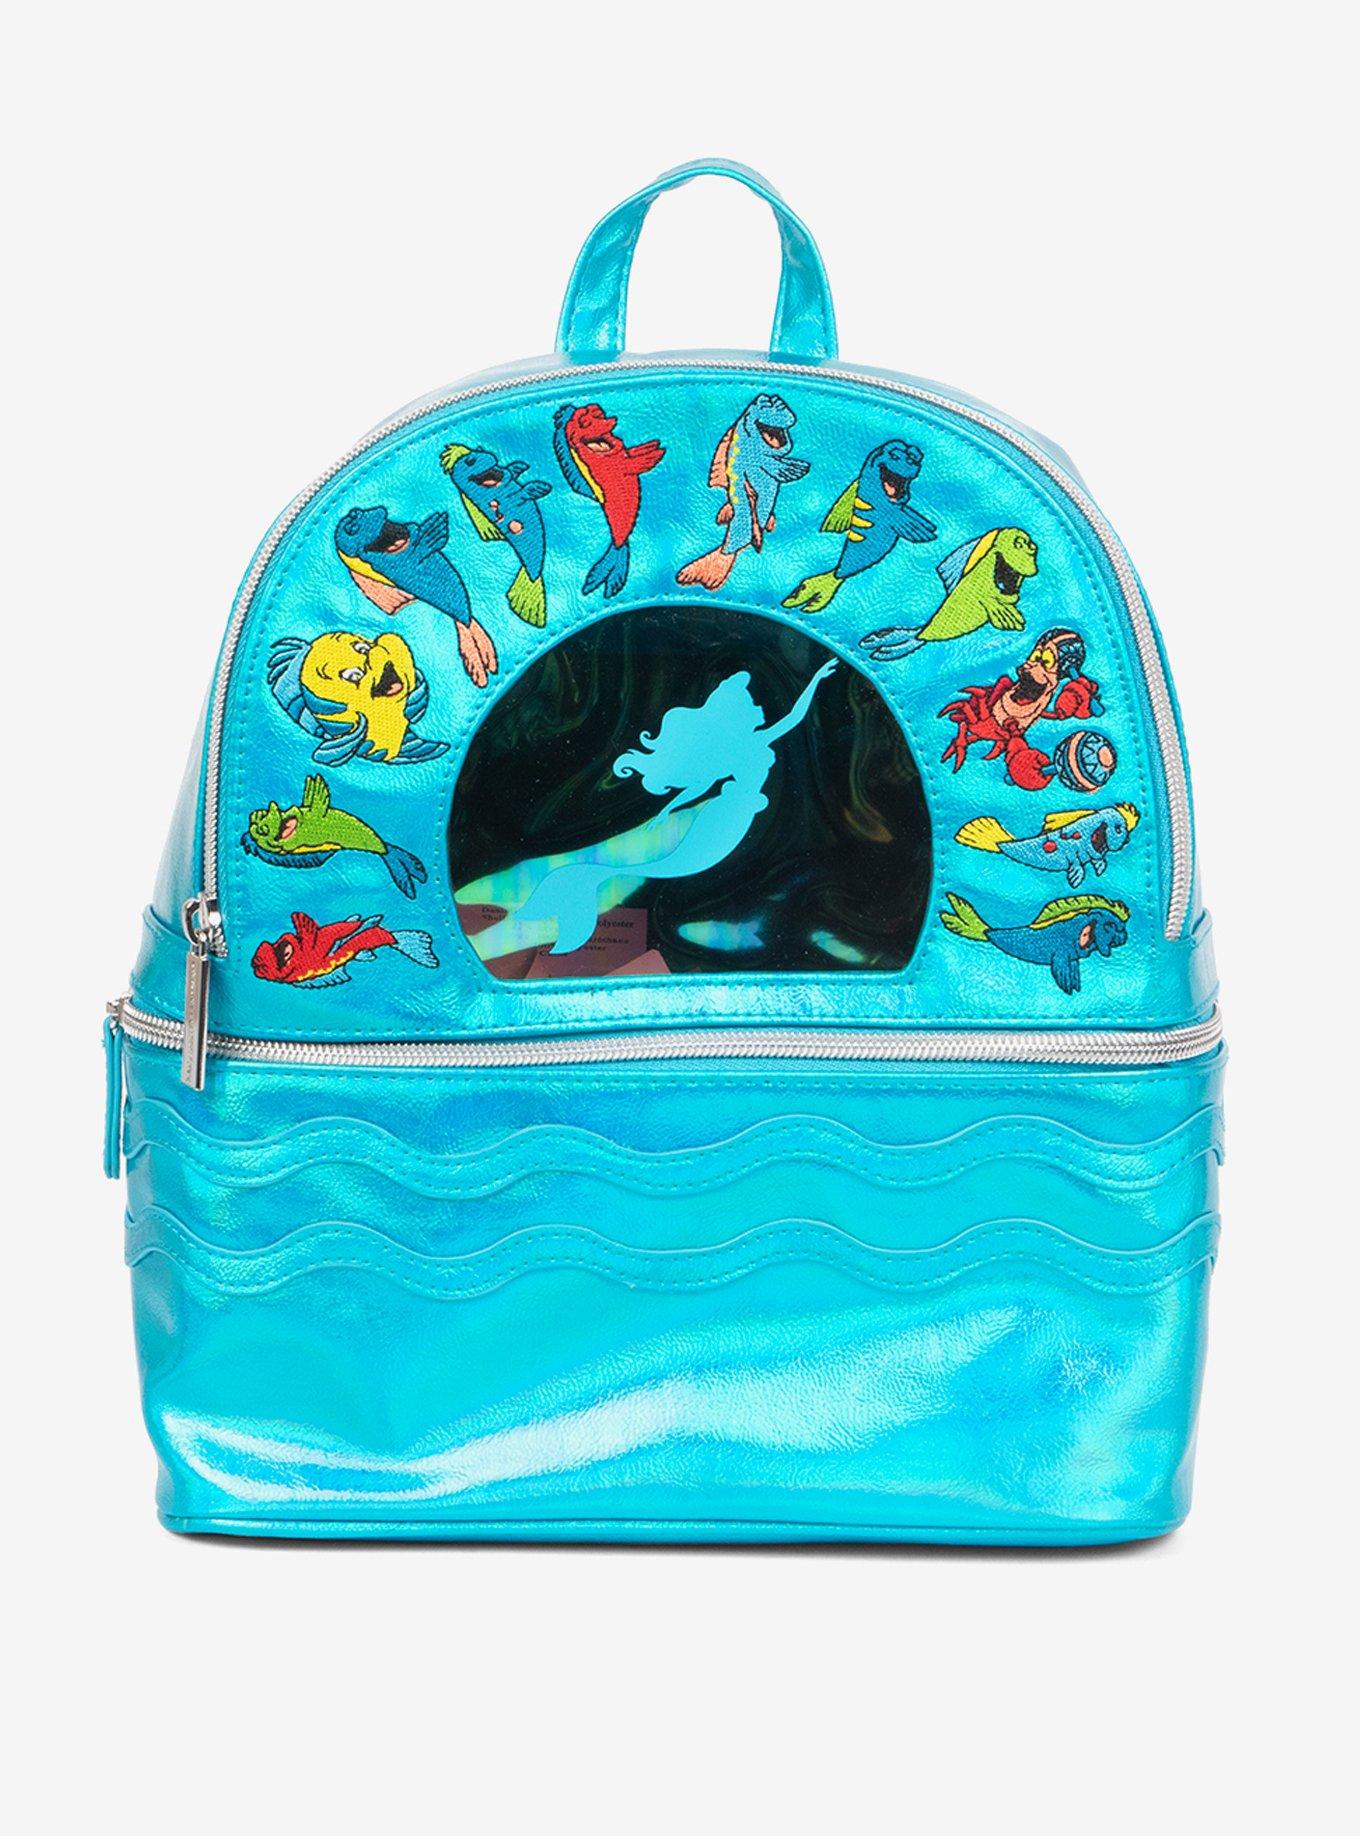 Danielle Nicole Disney The Little Mermaid Under The Sea Backpack Blue, , hi-res